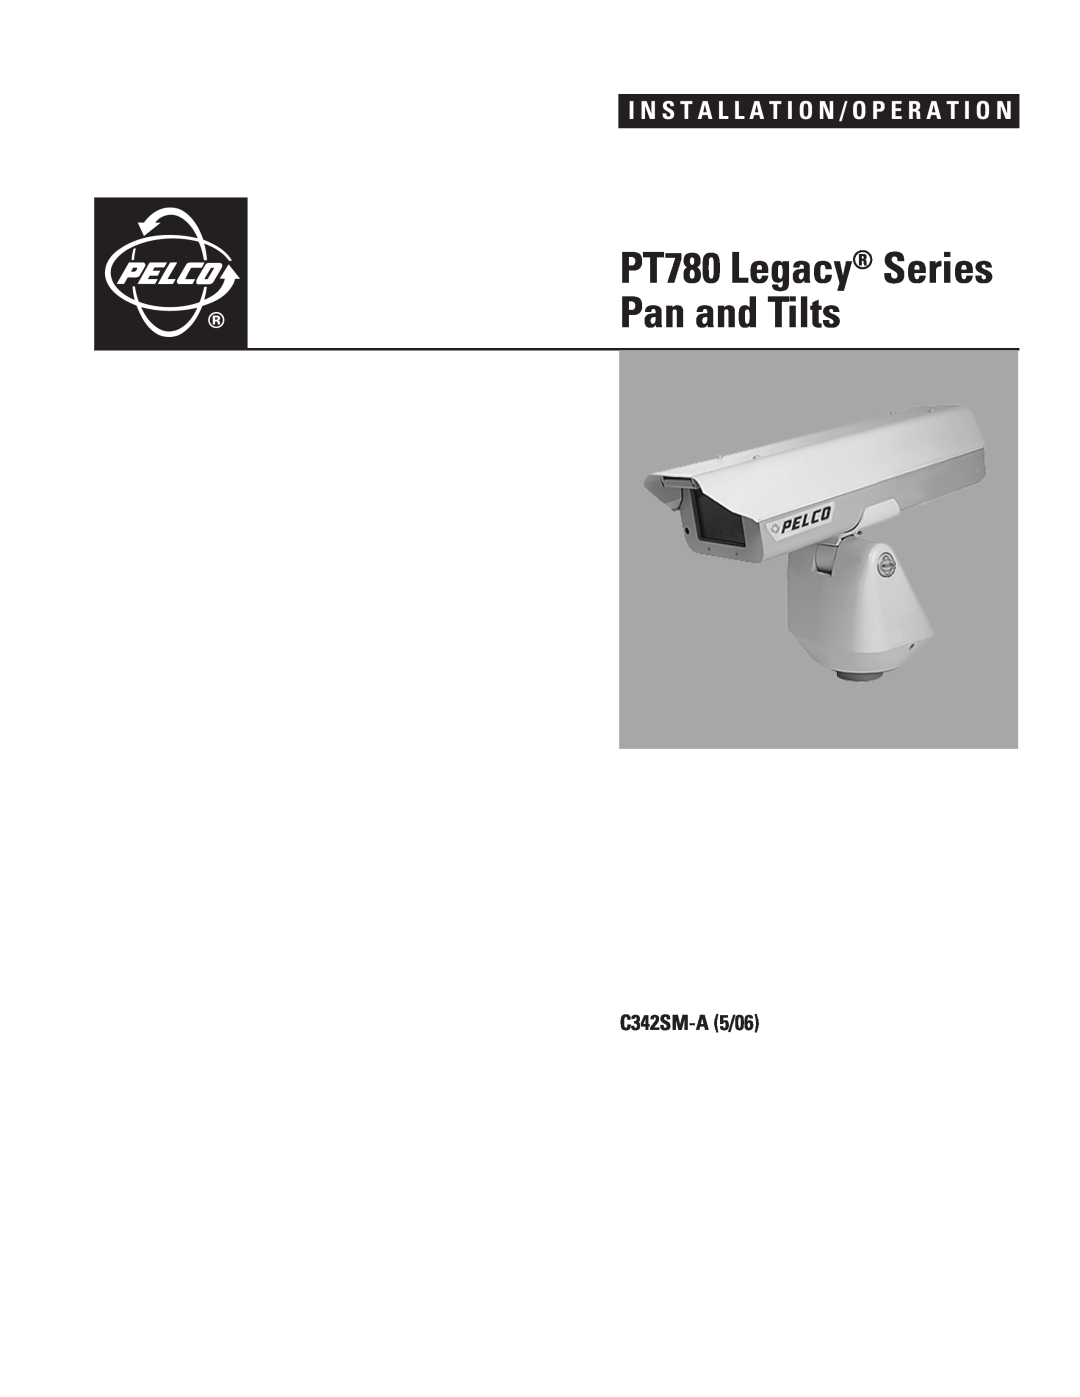 Pelco PT7800 manual PT780 Legacy Series Pan and Tilts, I N S T A L L A T I O N / O P E R A T I O N, C342SM-A5/06 